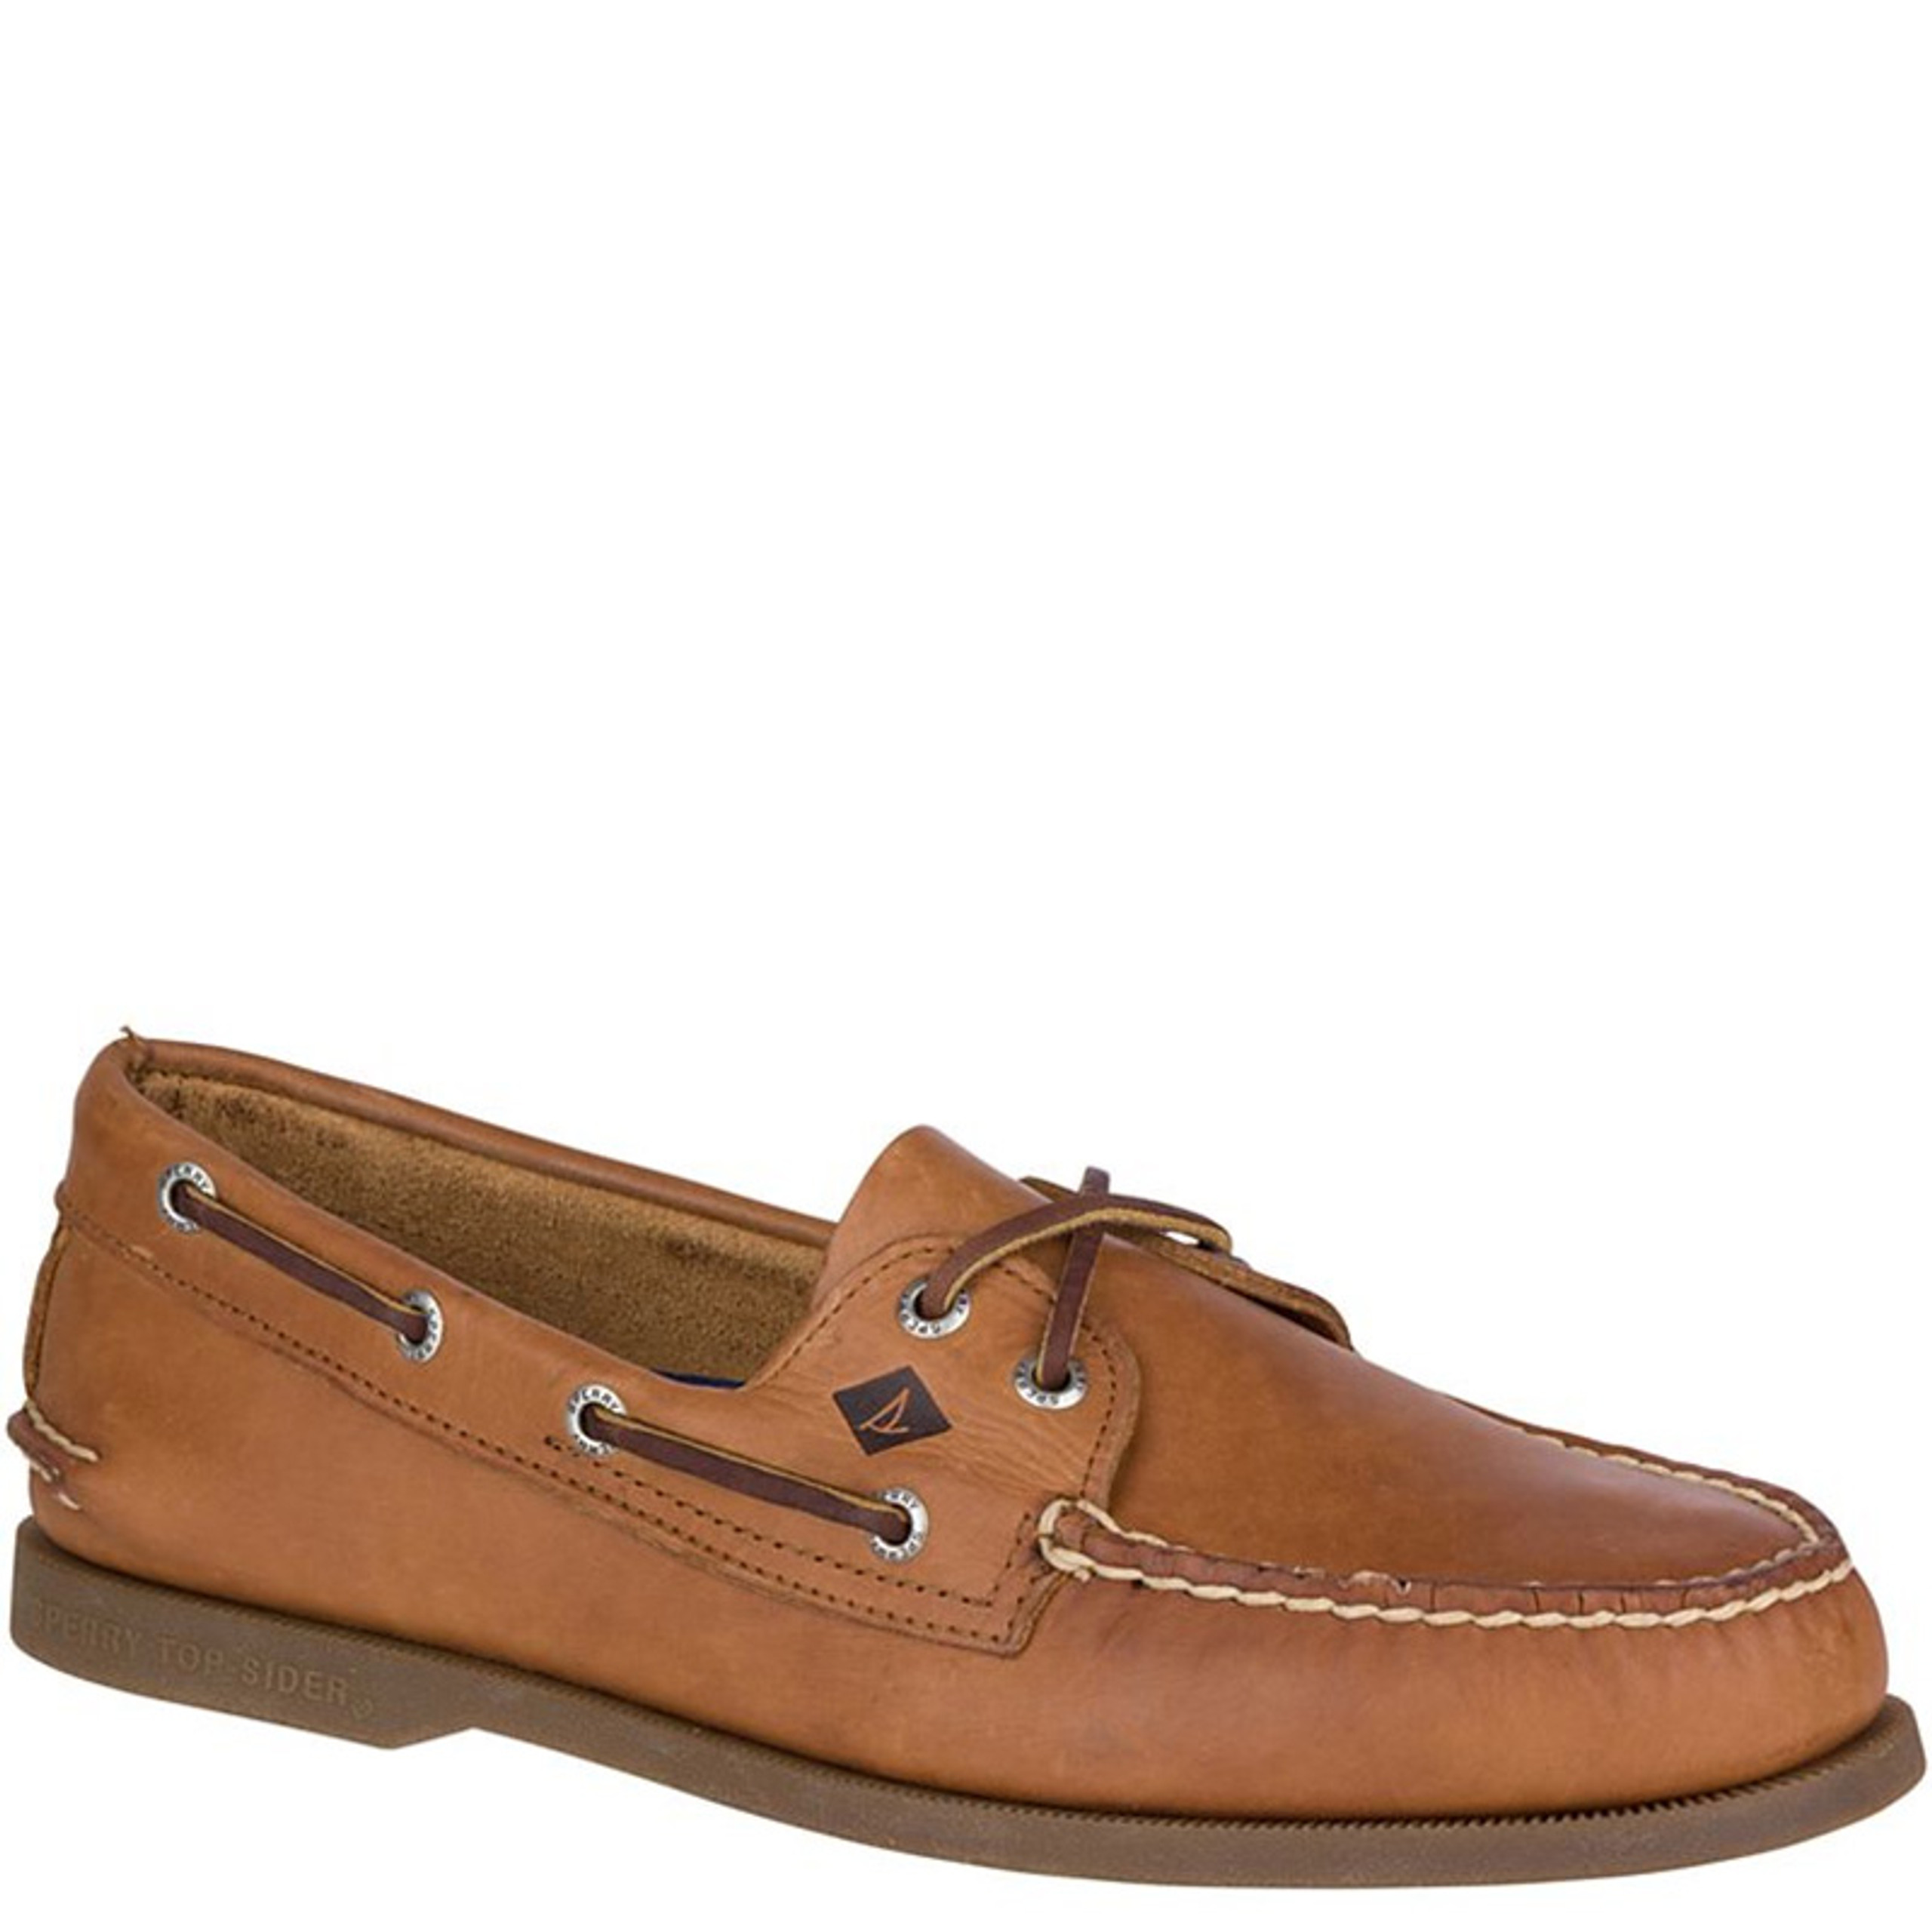 Sperry 0197640 Men's AUTHENTIC ORIGINAL Boat Shoes Sahara Leather ...